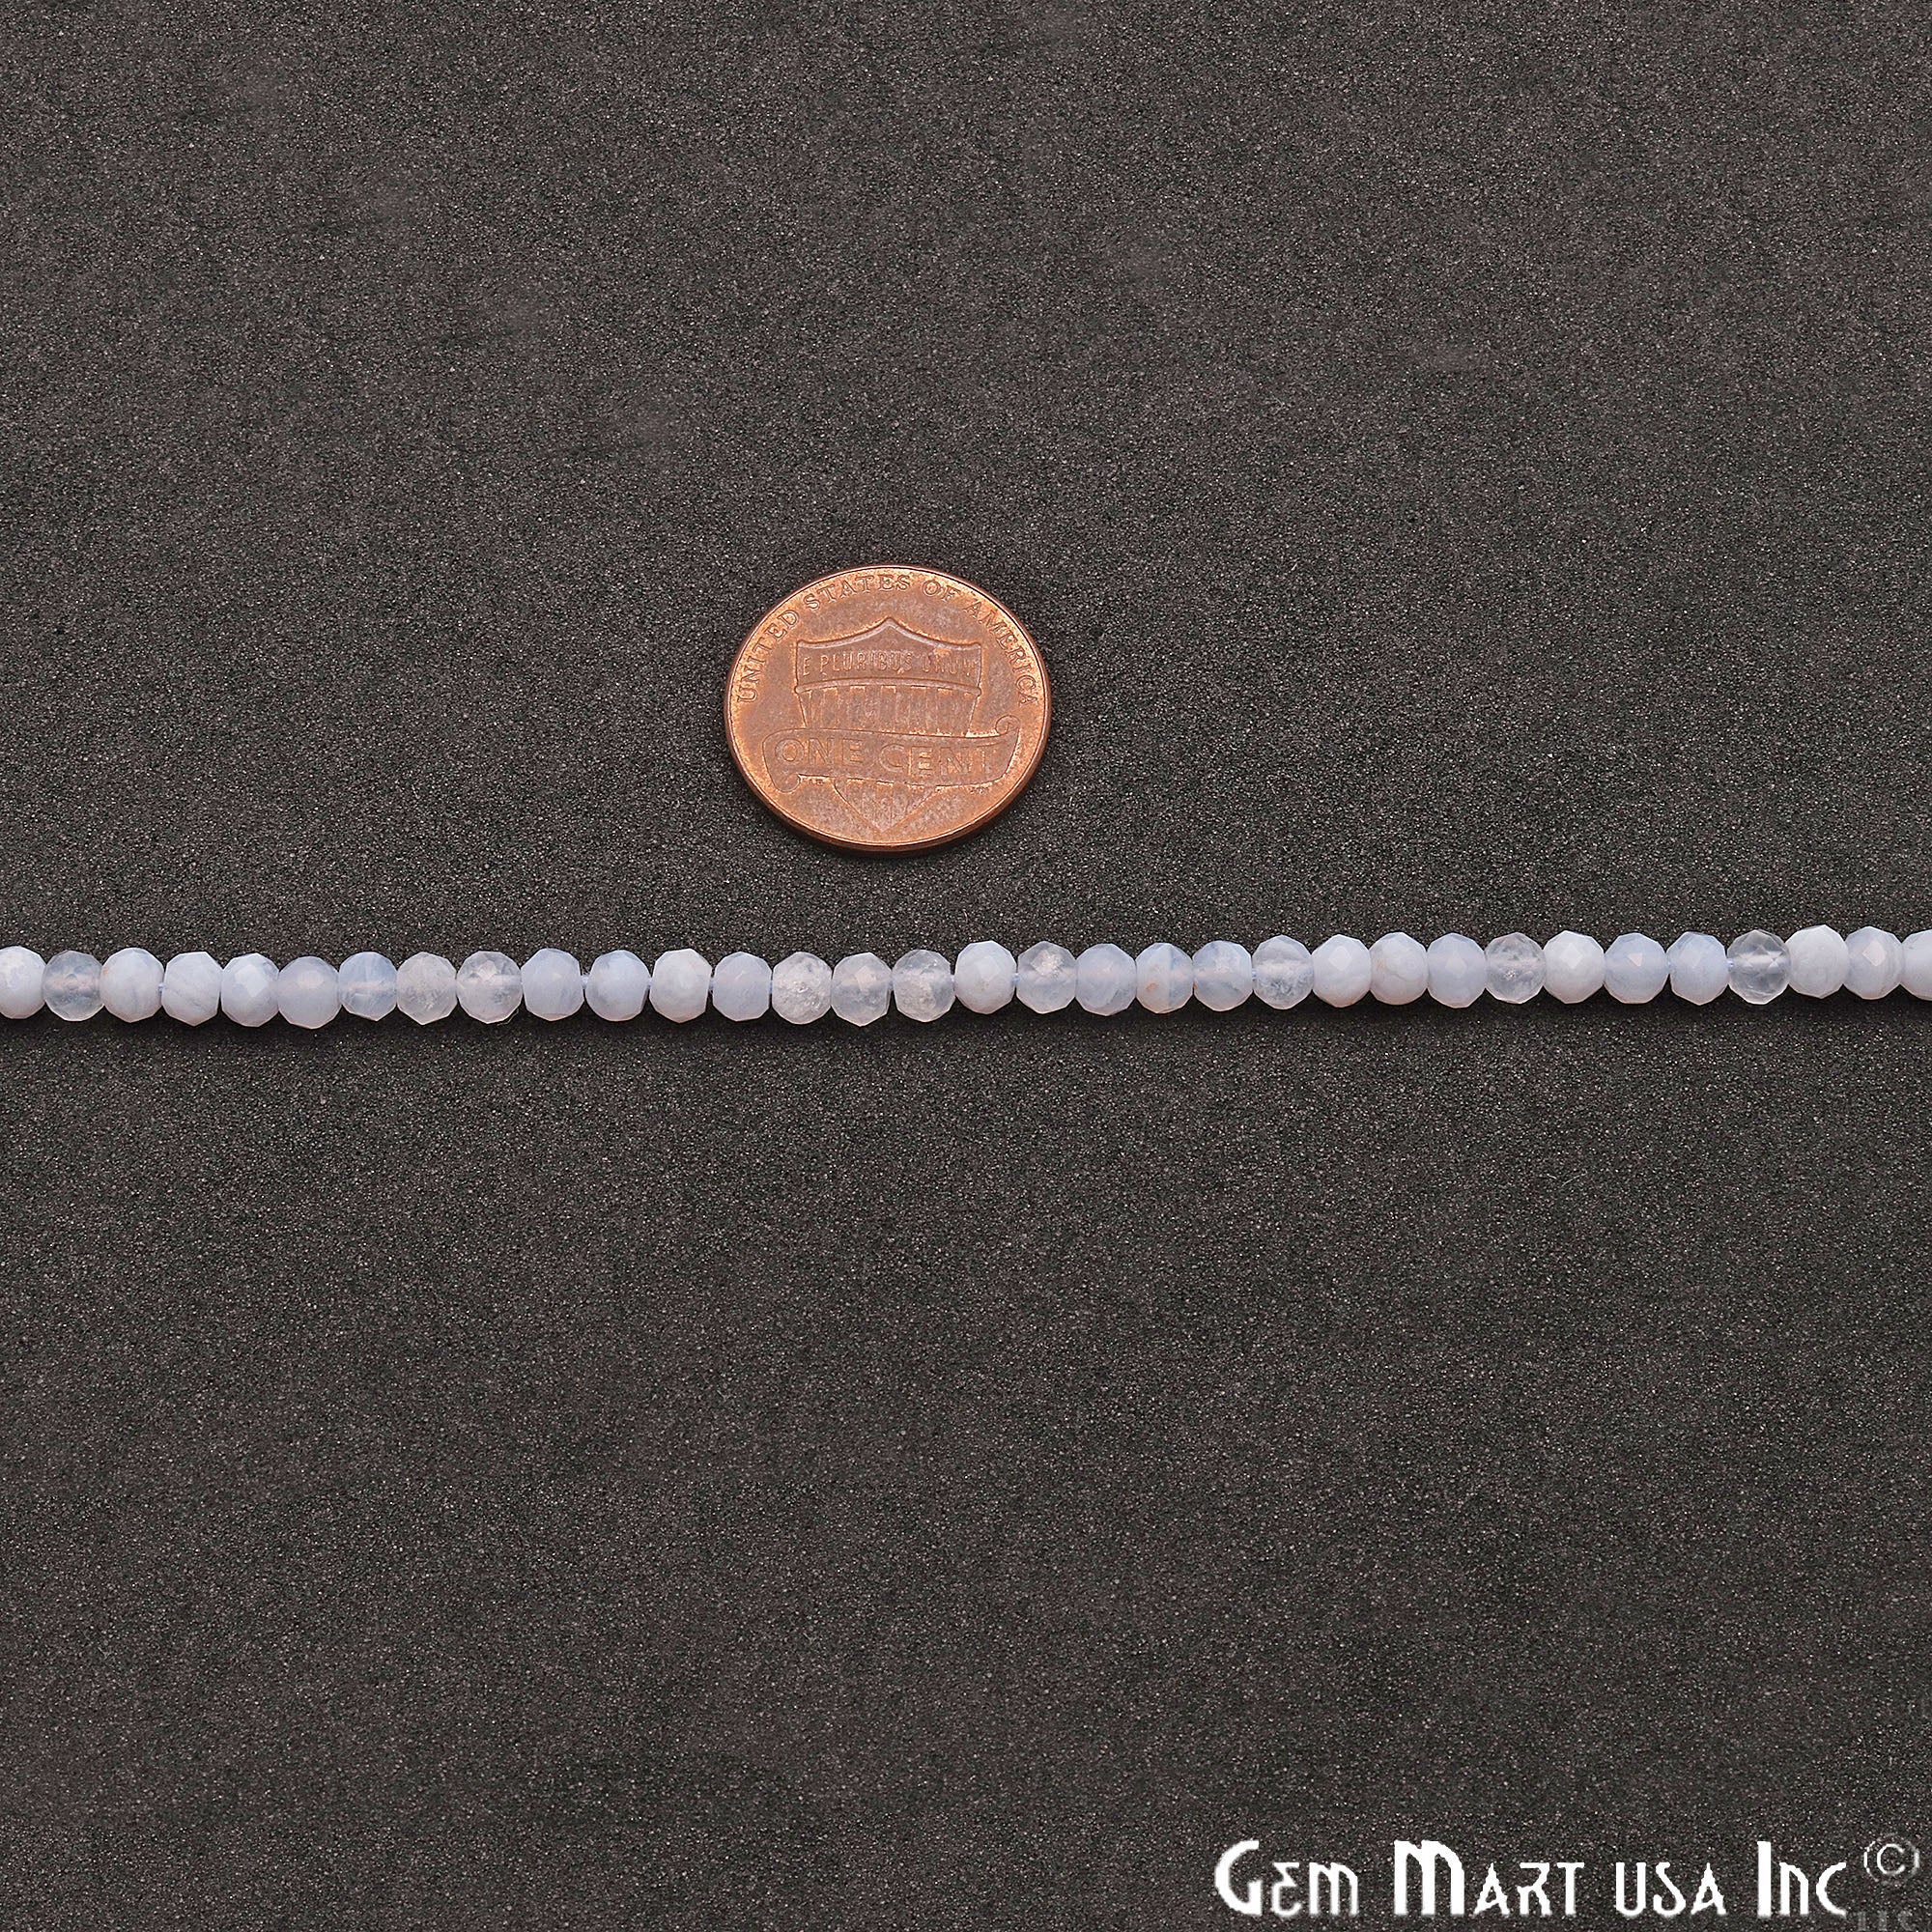 Blue Lace Agate Round 3-4mm Crafting Beads Gemstone Strands 13 INCH - GemMartUSA